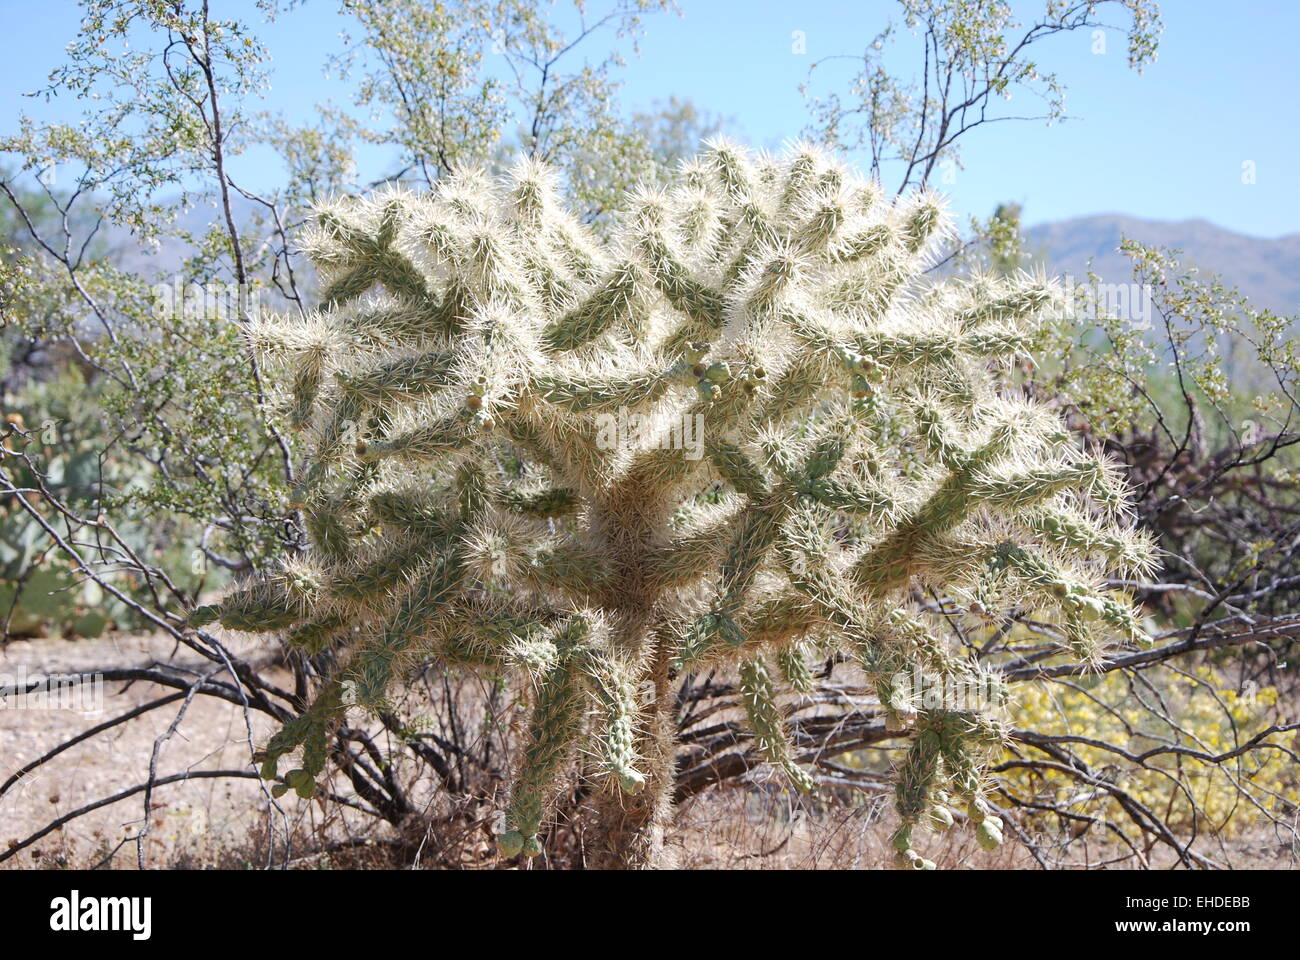 Bluehender Kaktus / Bloom cactus Stock Photo